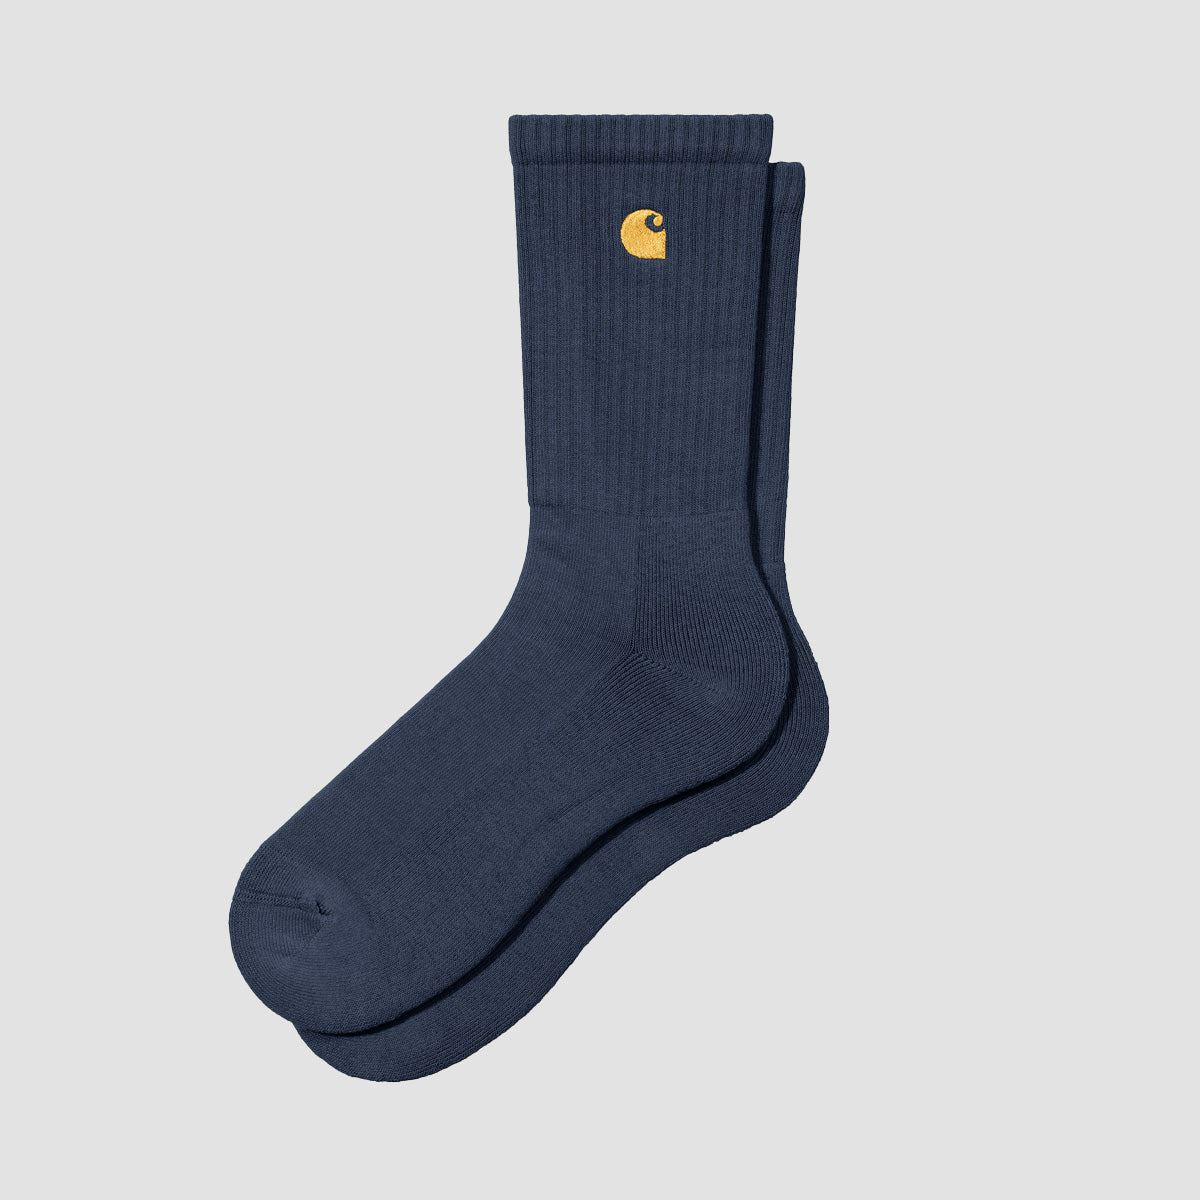 Carhartt WIP Chase Socks Blue/Gold - Unisex